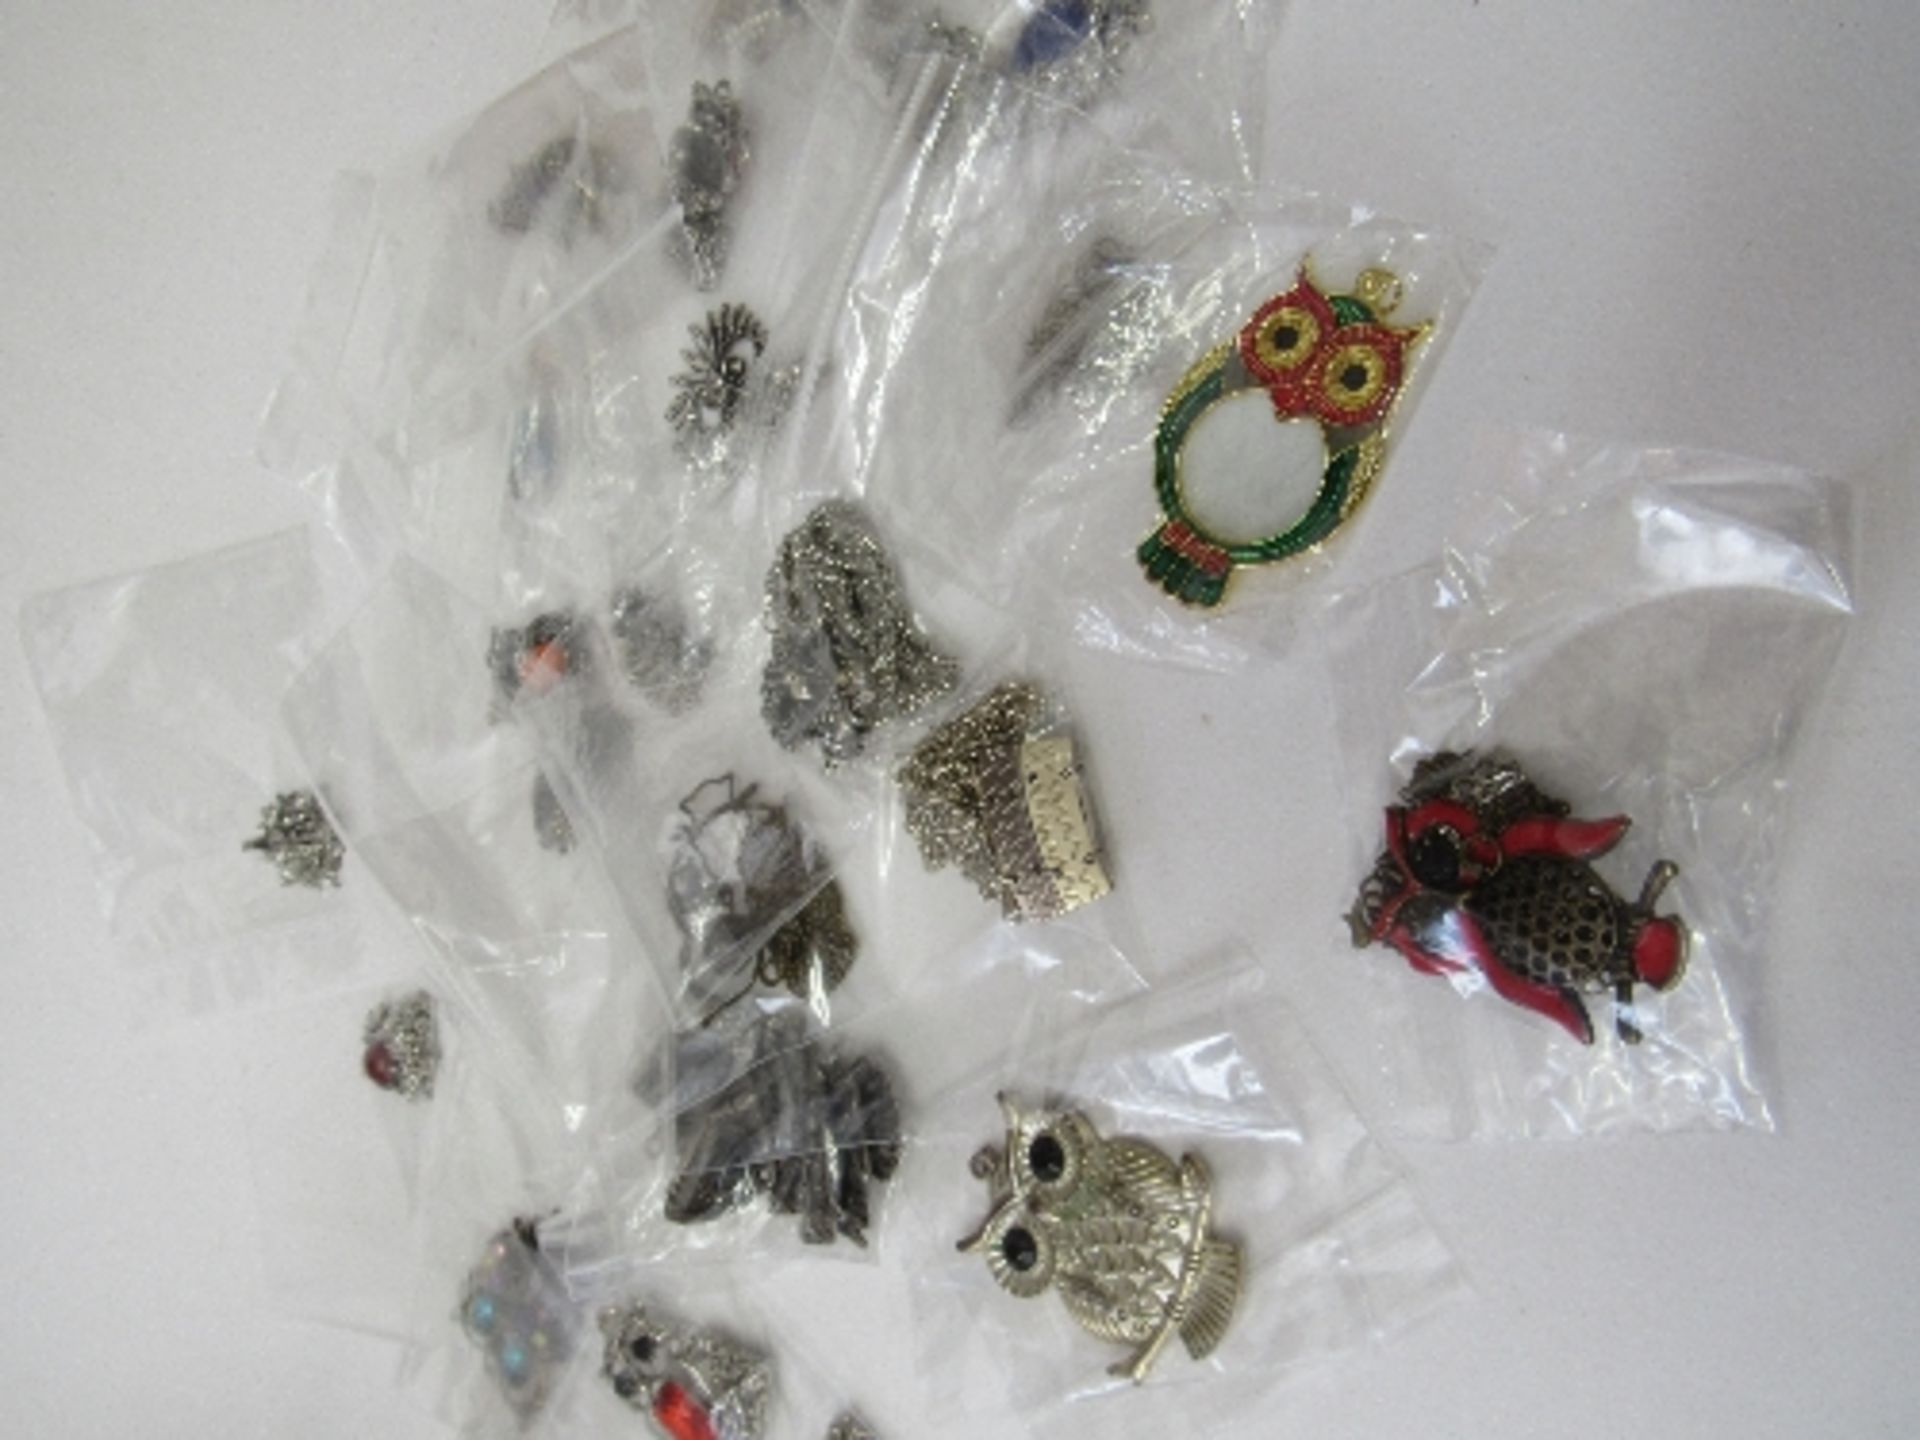 Collection of owl design costume jewellery. Estimate £10-15.